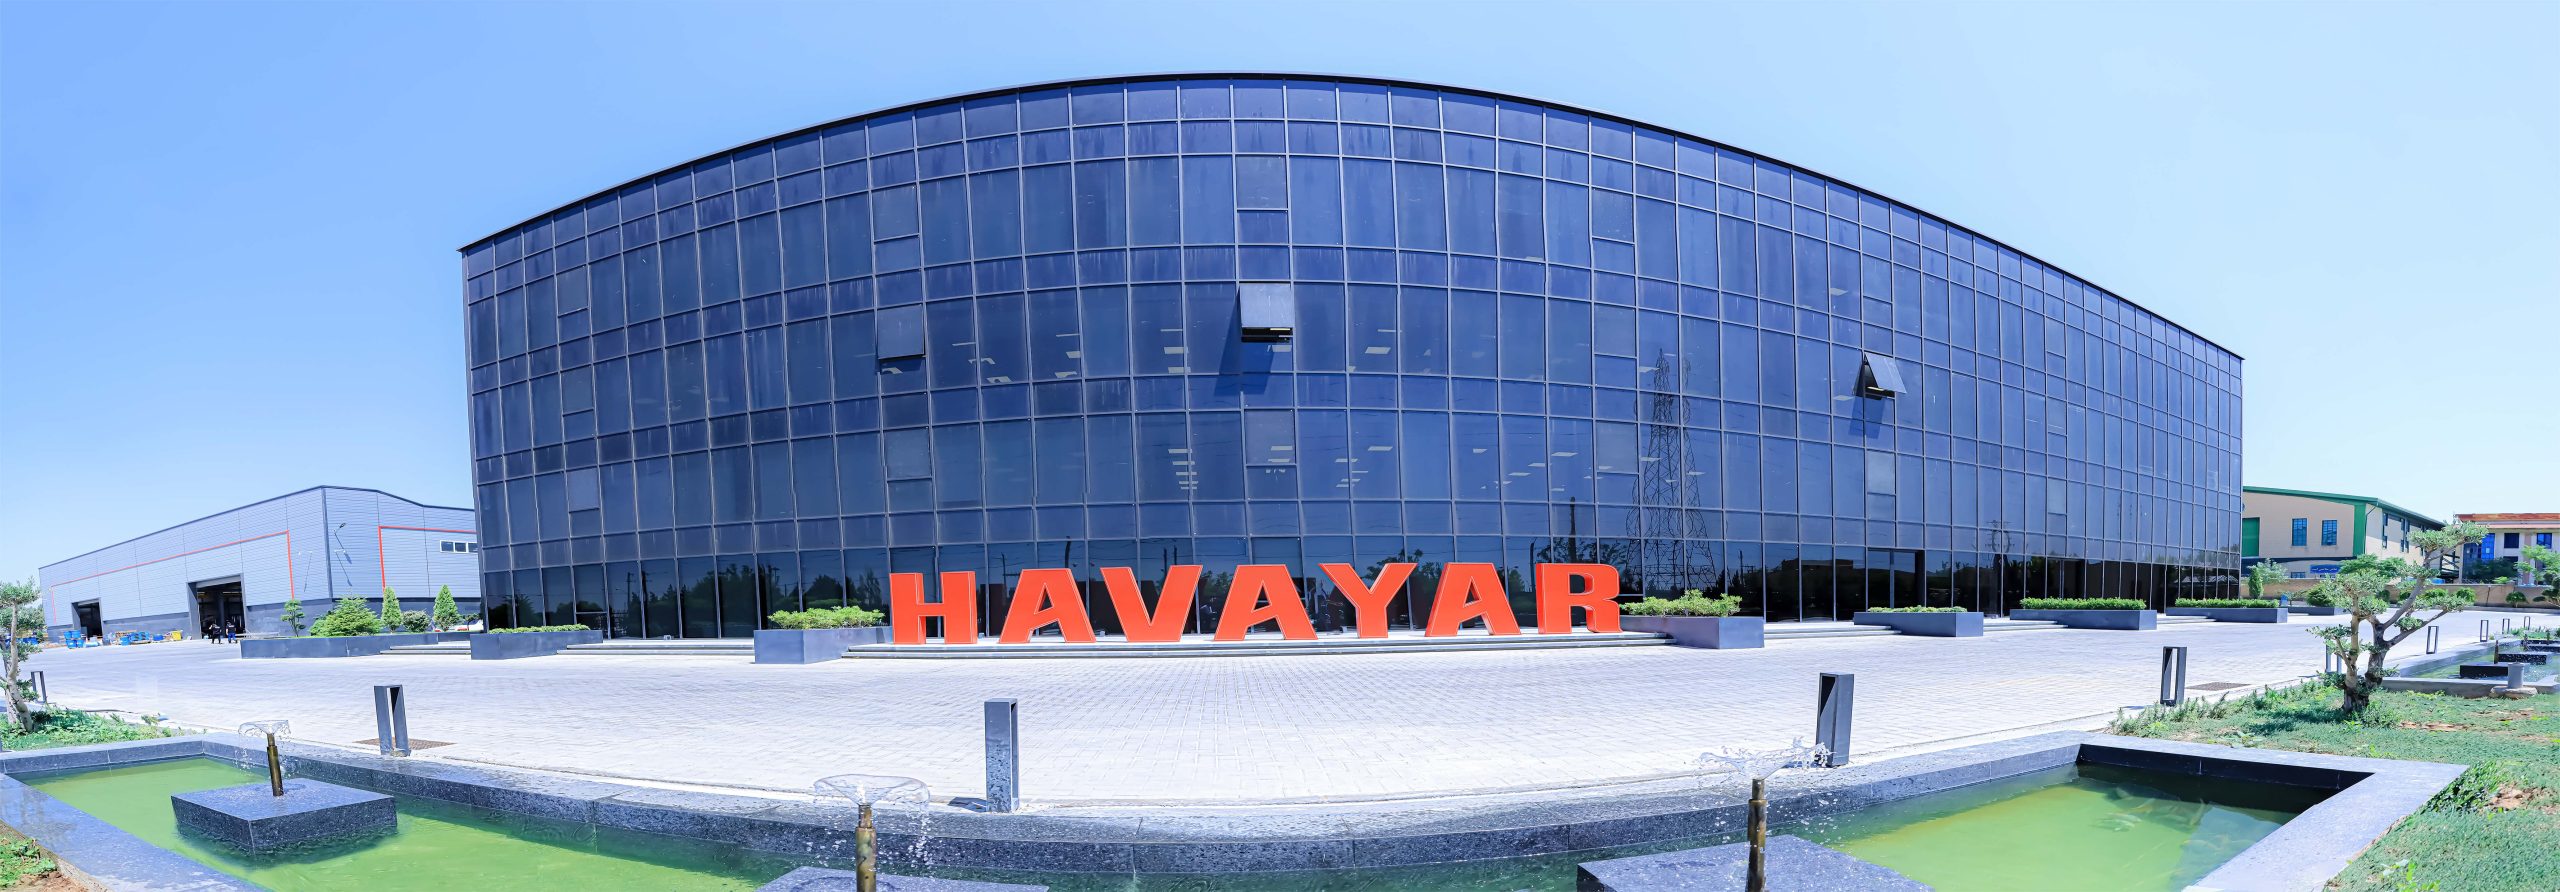 about_havayar_1